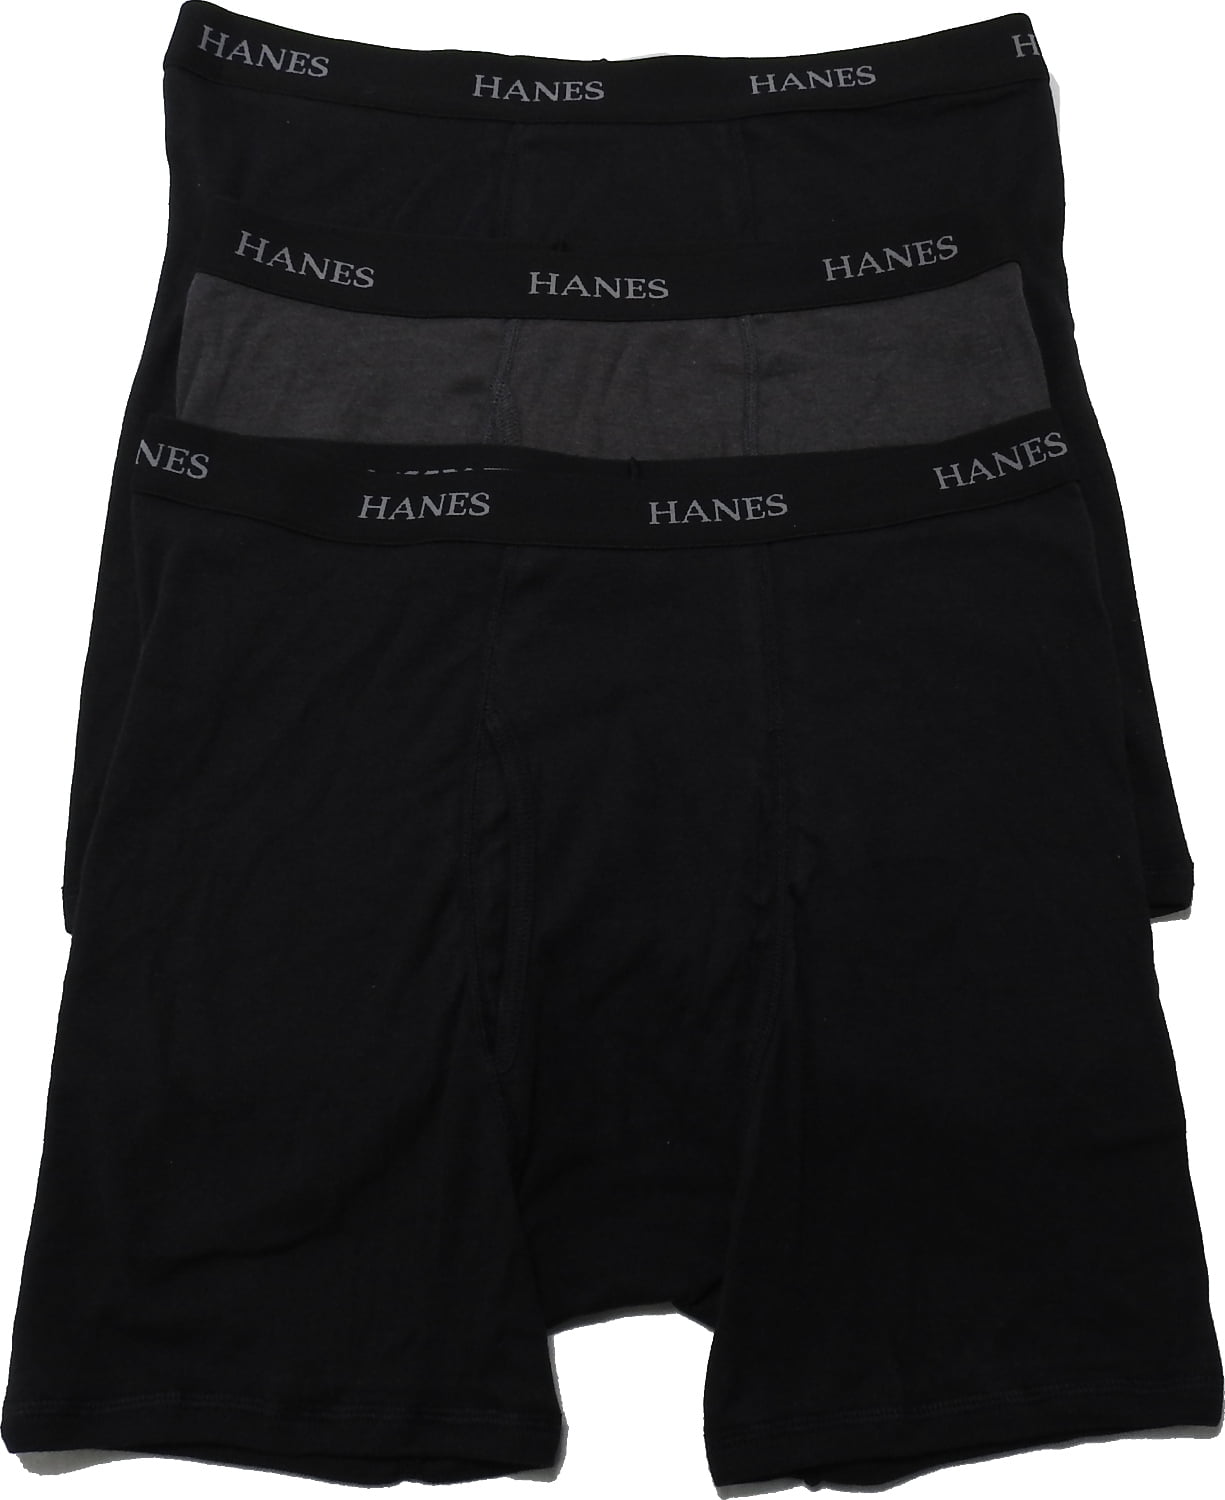 Hanes - Hanes Mens Size Medium Cotton 3-Pack Boxer Briefs, Black ...